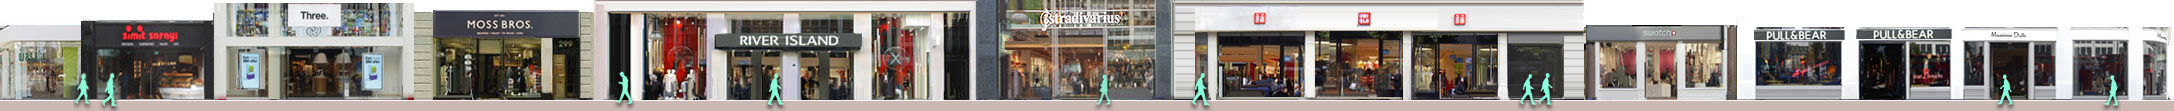 Oxford Street shops: River Island, Stradivarius, Pull and Bear, Massimo Dutti